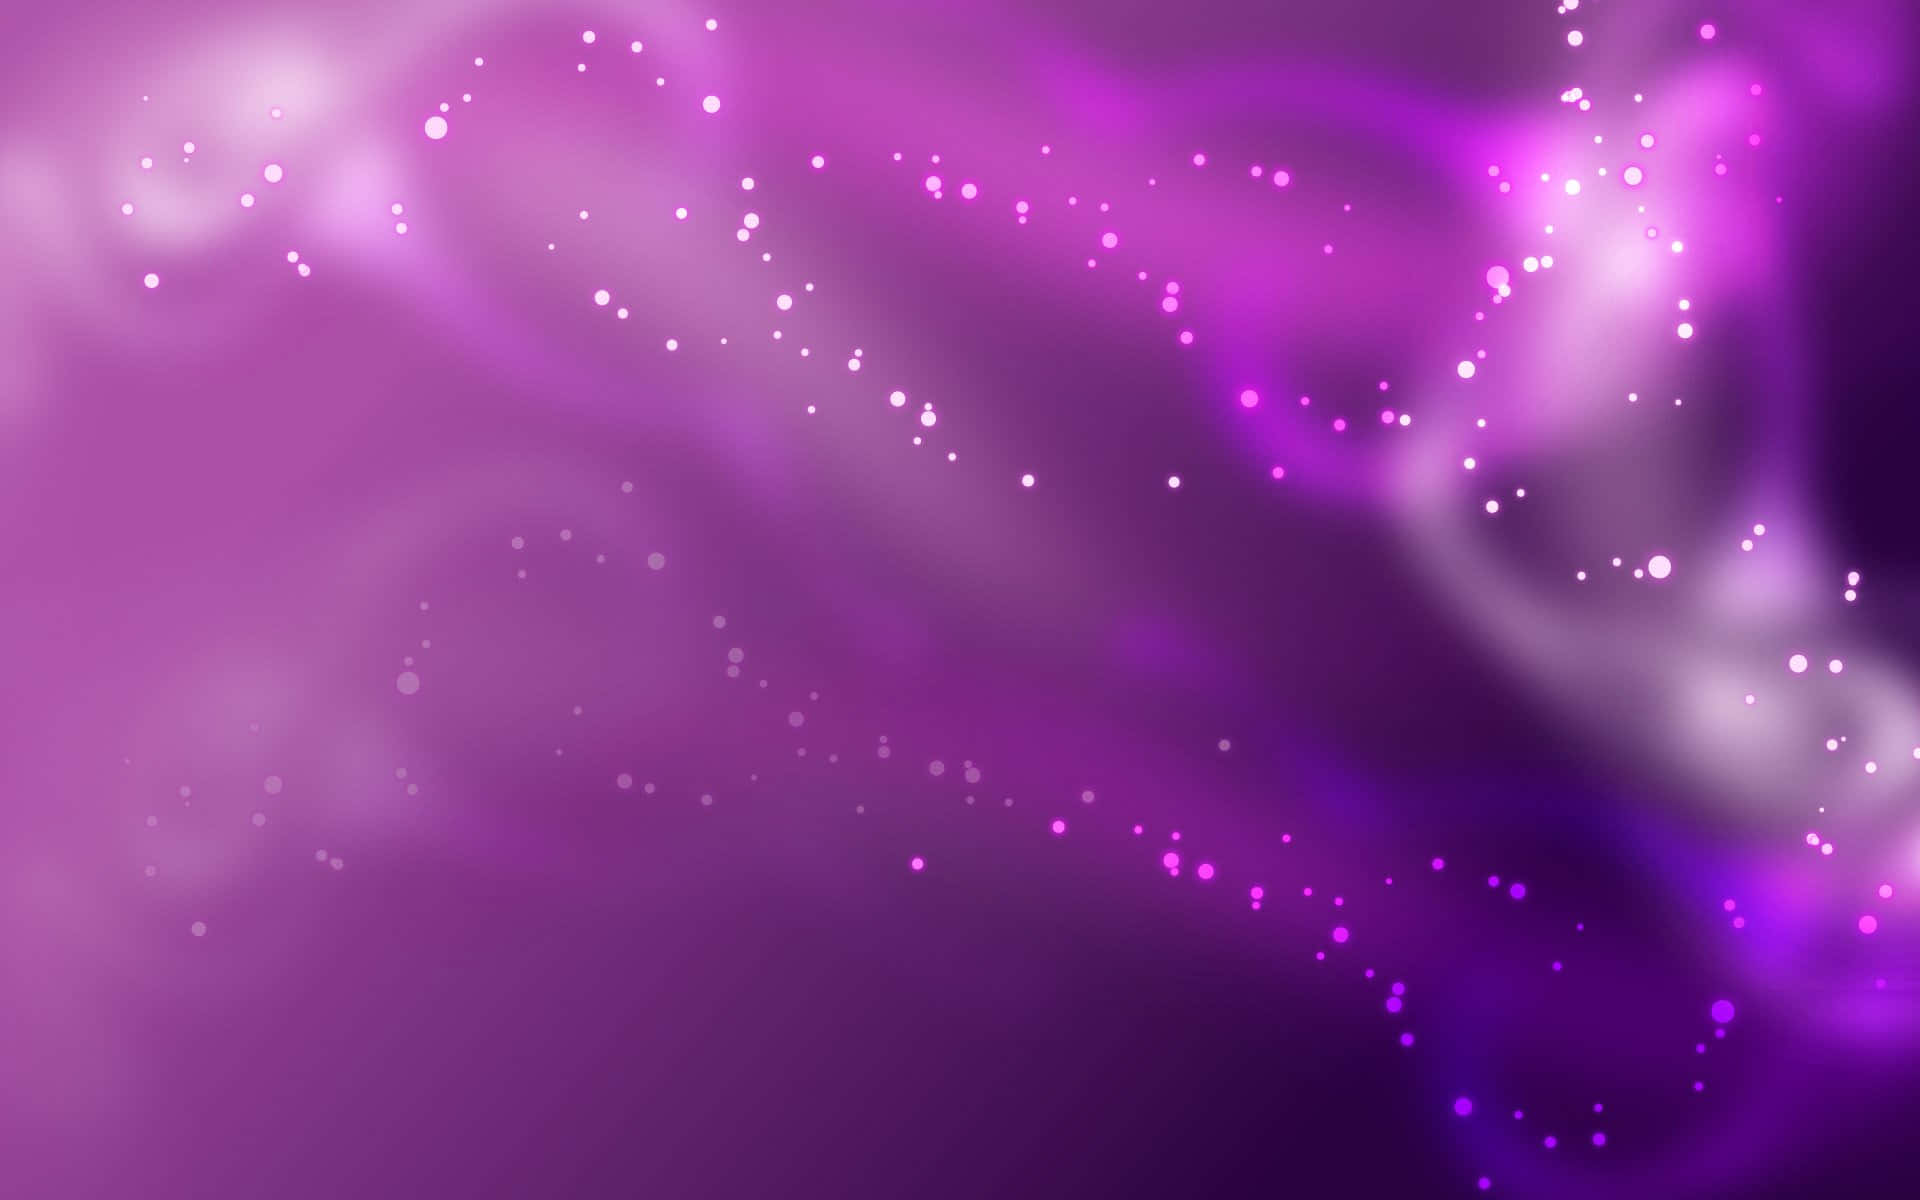 Faint Pretty Purple Swirls With Glitters